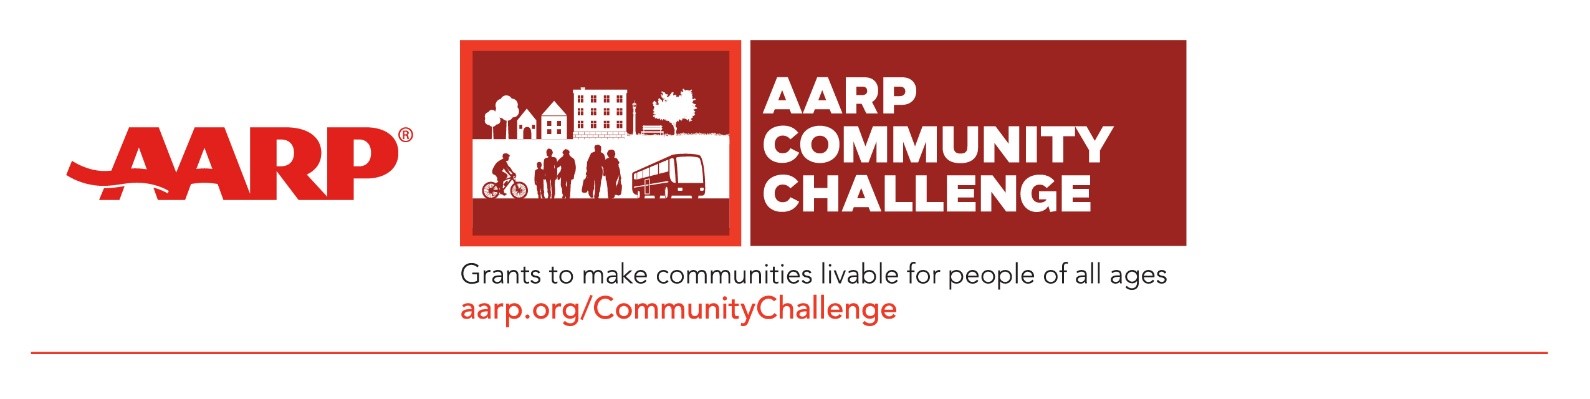 community challenge graphic.jpg